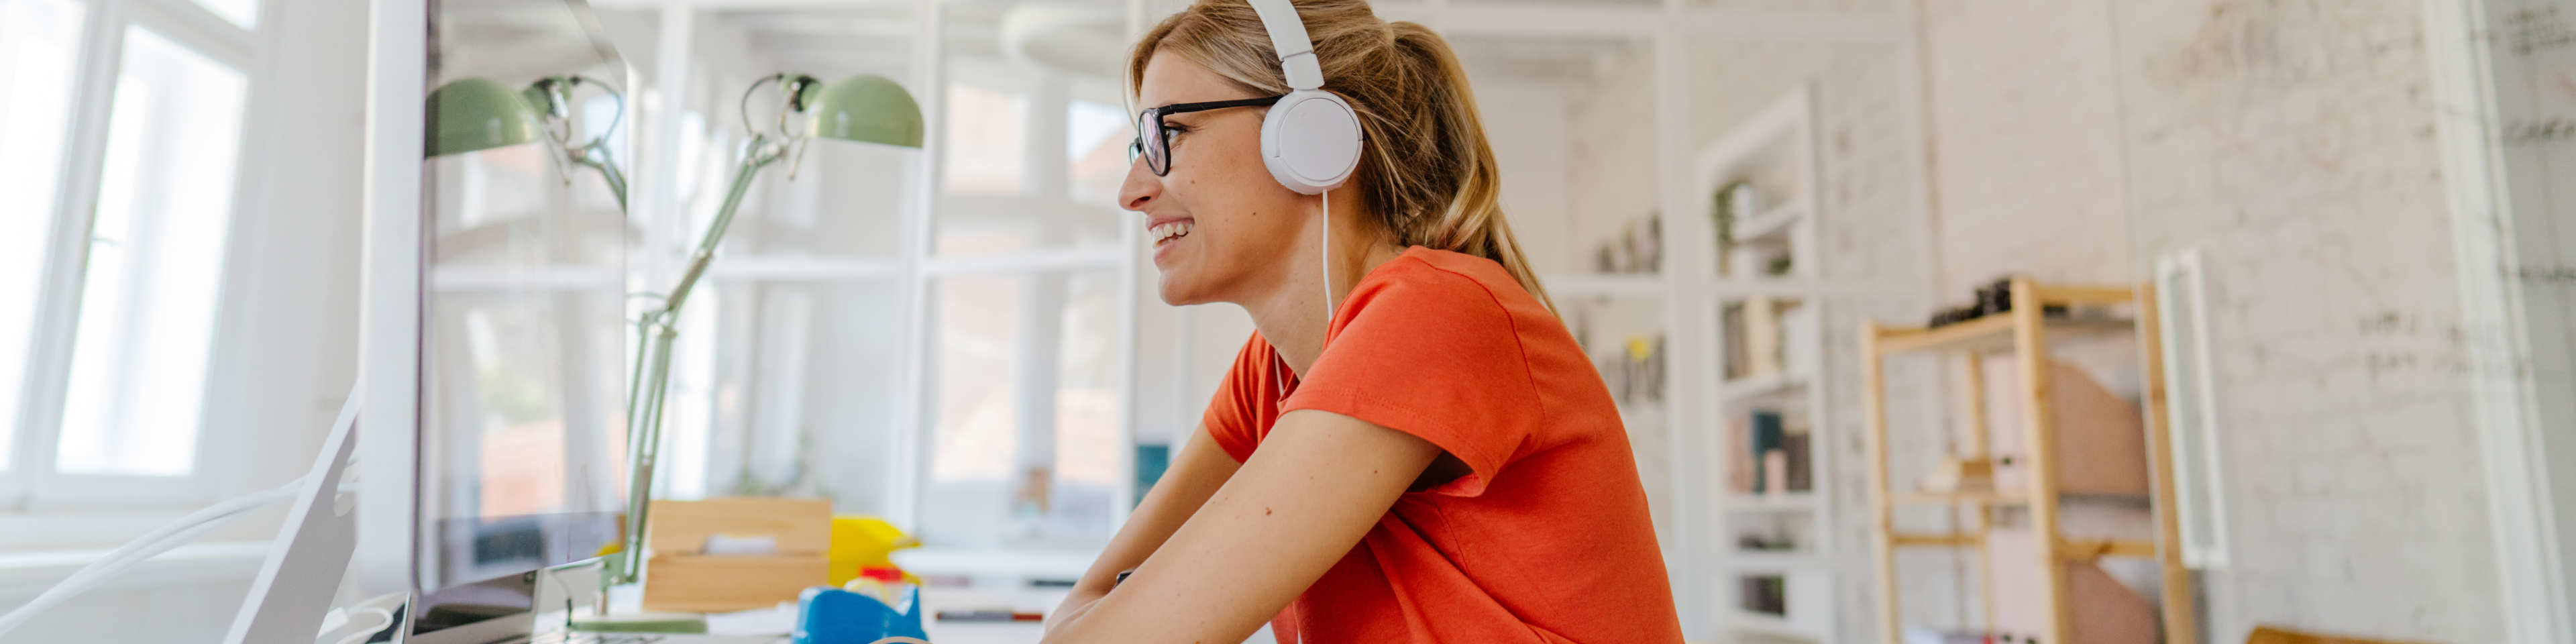 woman videoconferencing with headphones